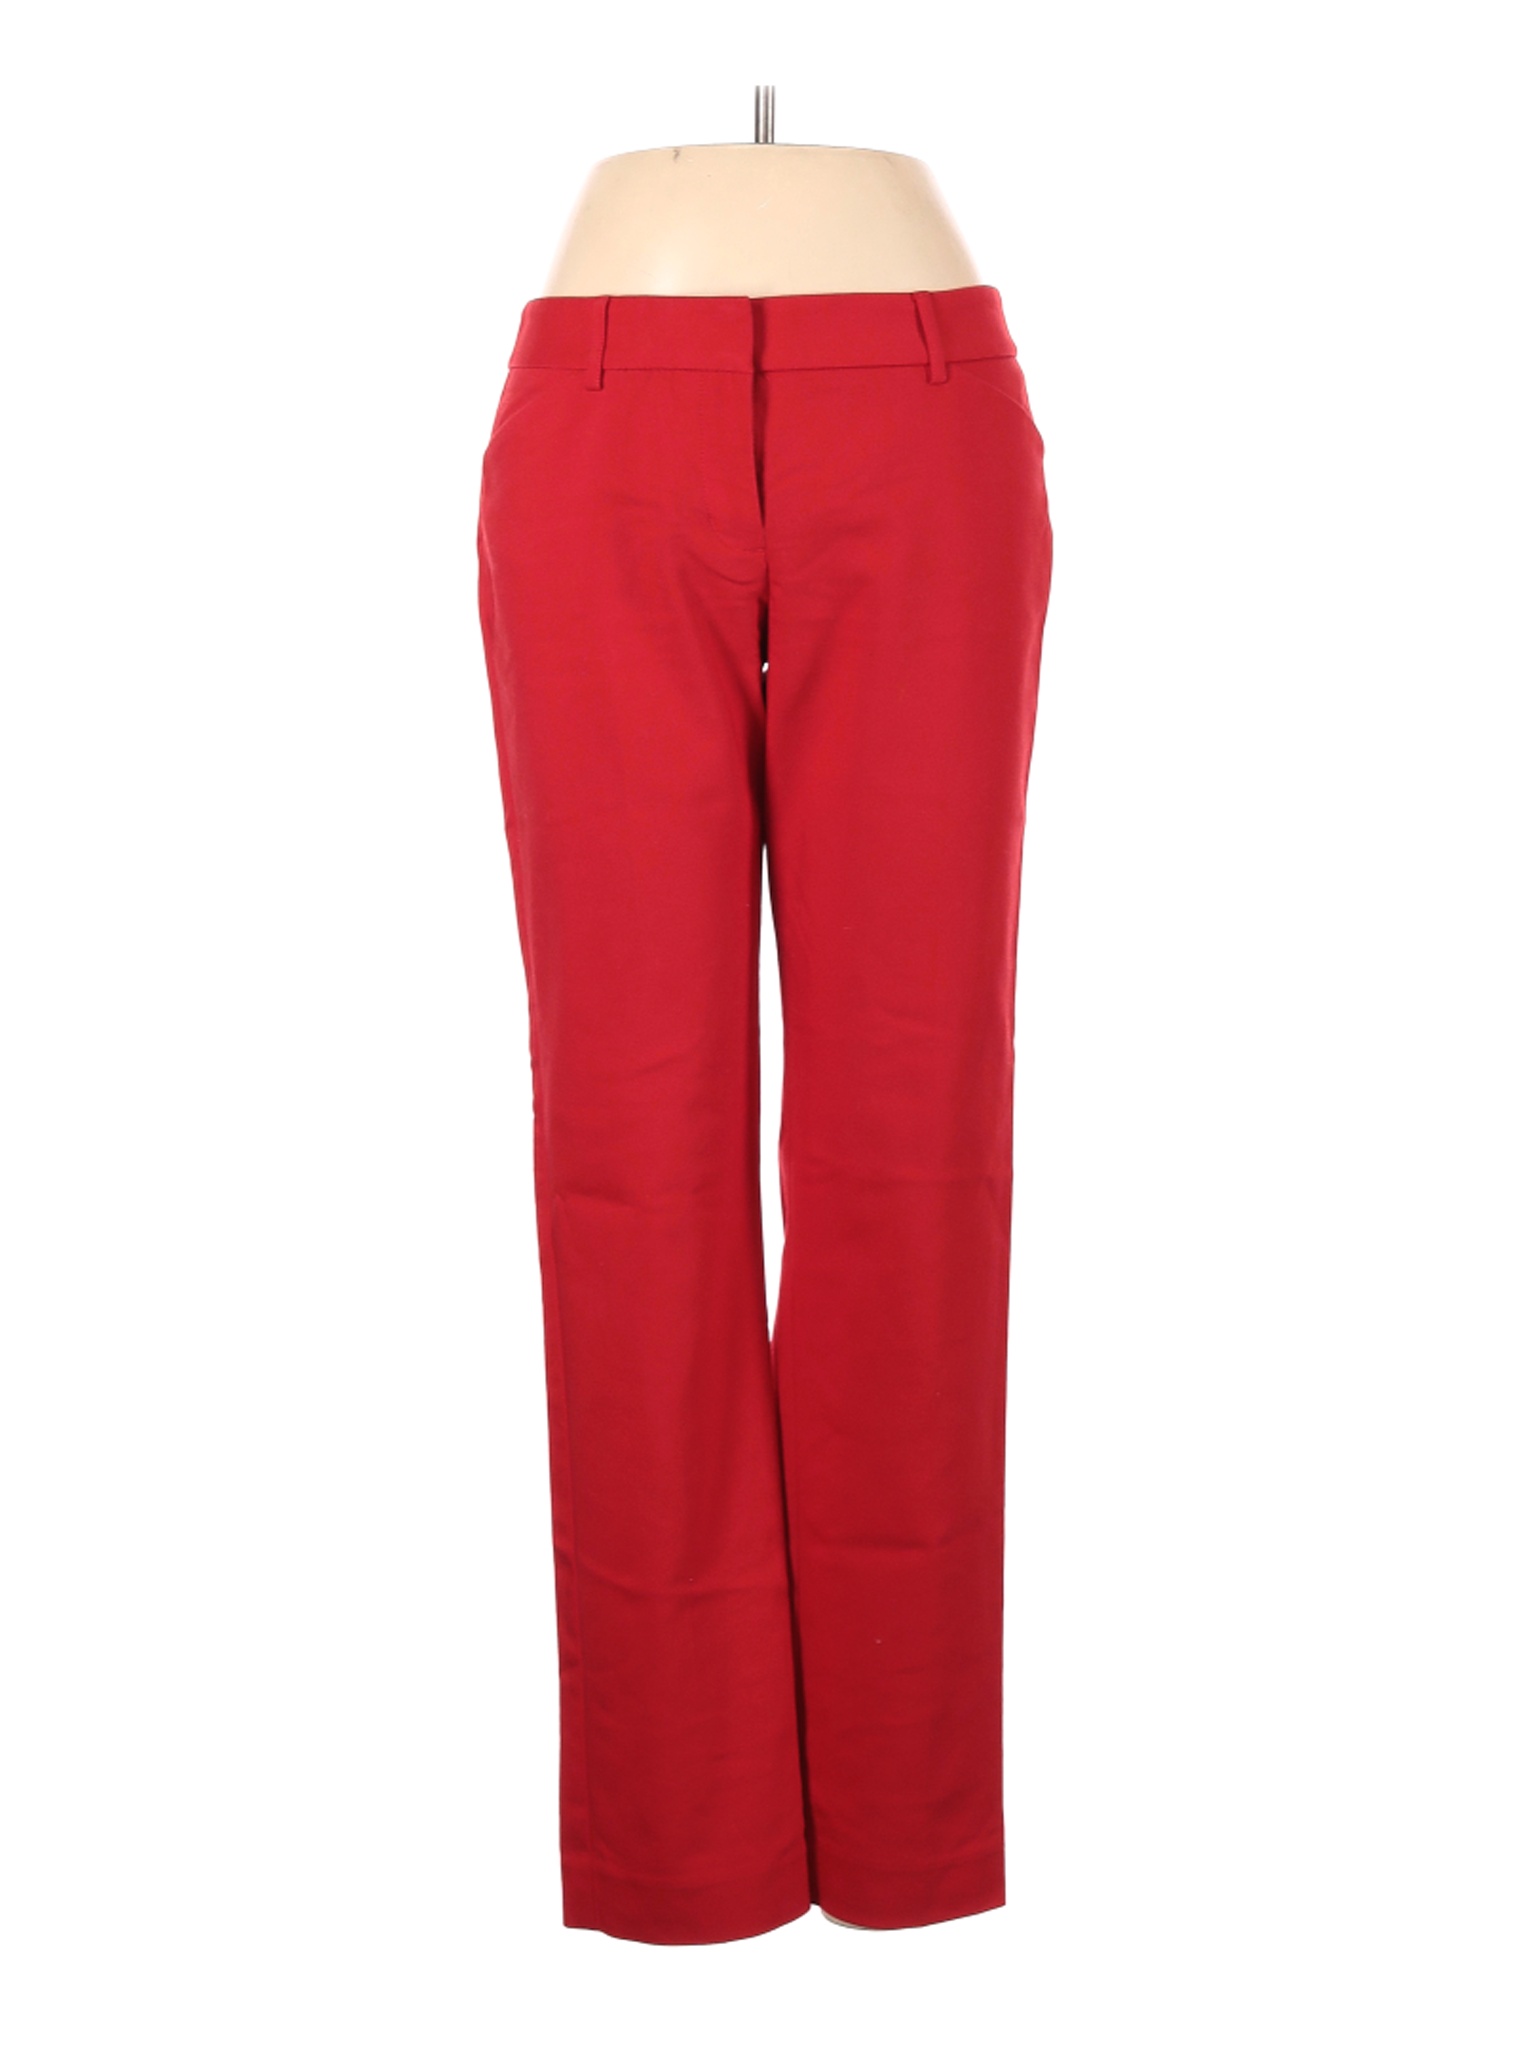 Express Women Red Dress Pants 6 | eBay